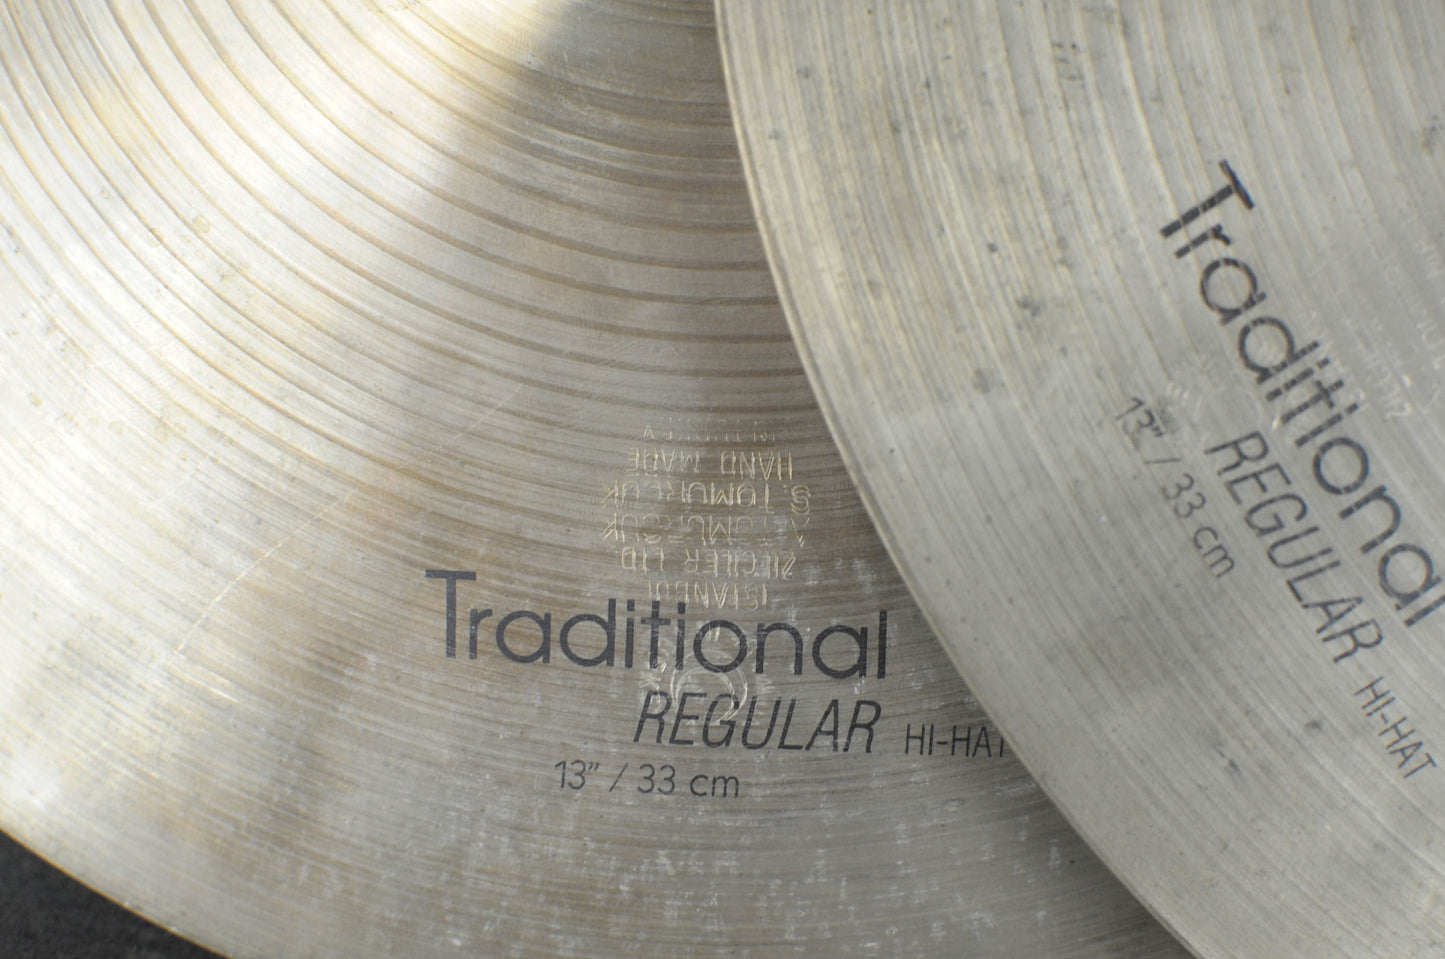 Istanbul Agop 13" Traditional Regular Hi Hat Cymbals 887g 888g